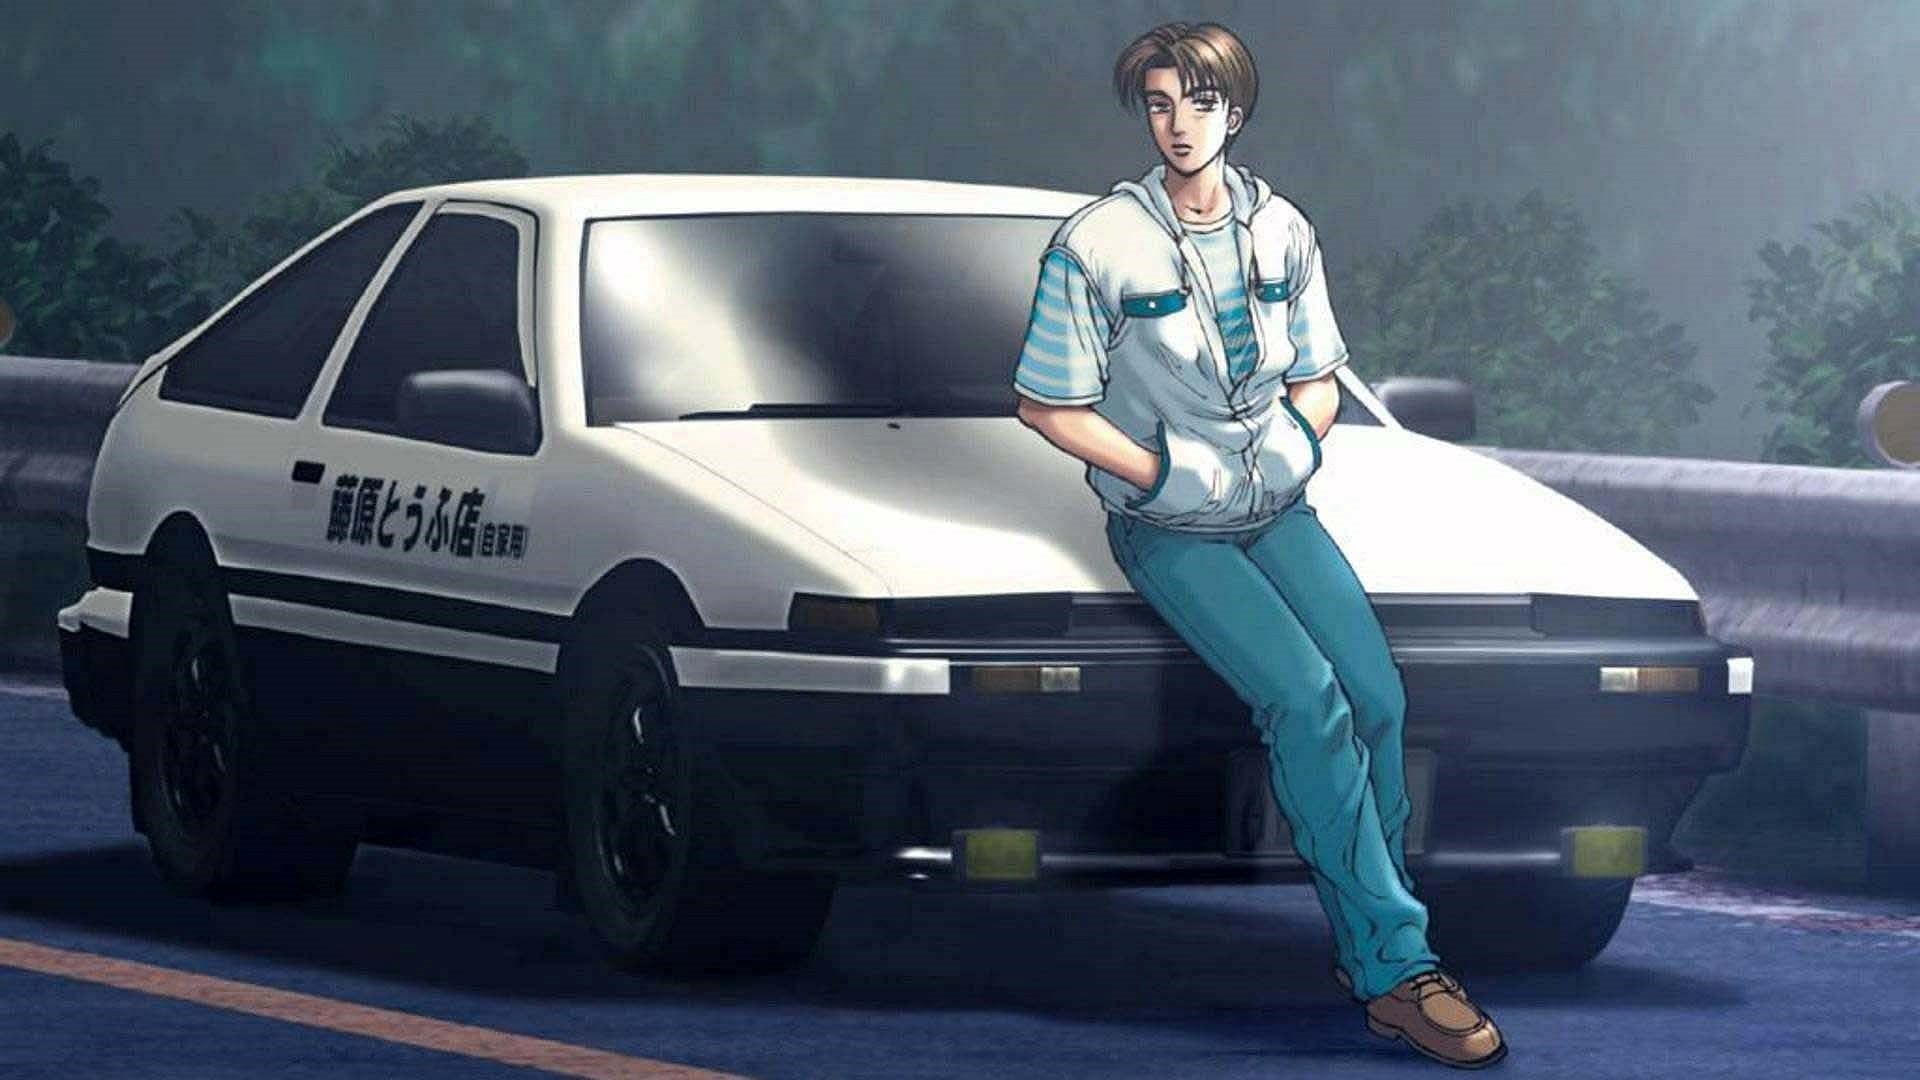 An iconic image associated with this racing anime (Image via Studio Gallop)